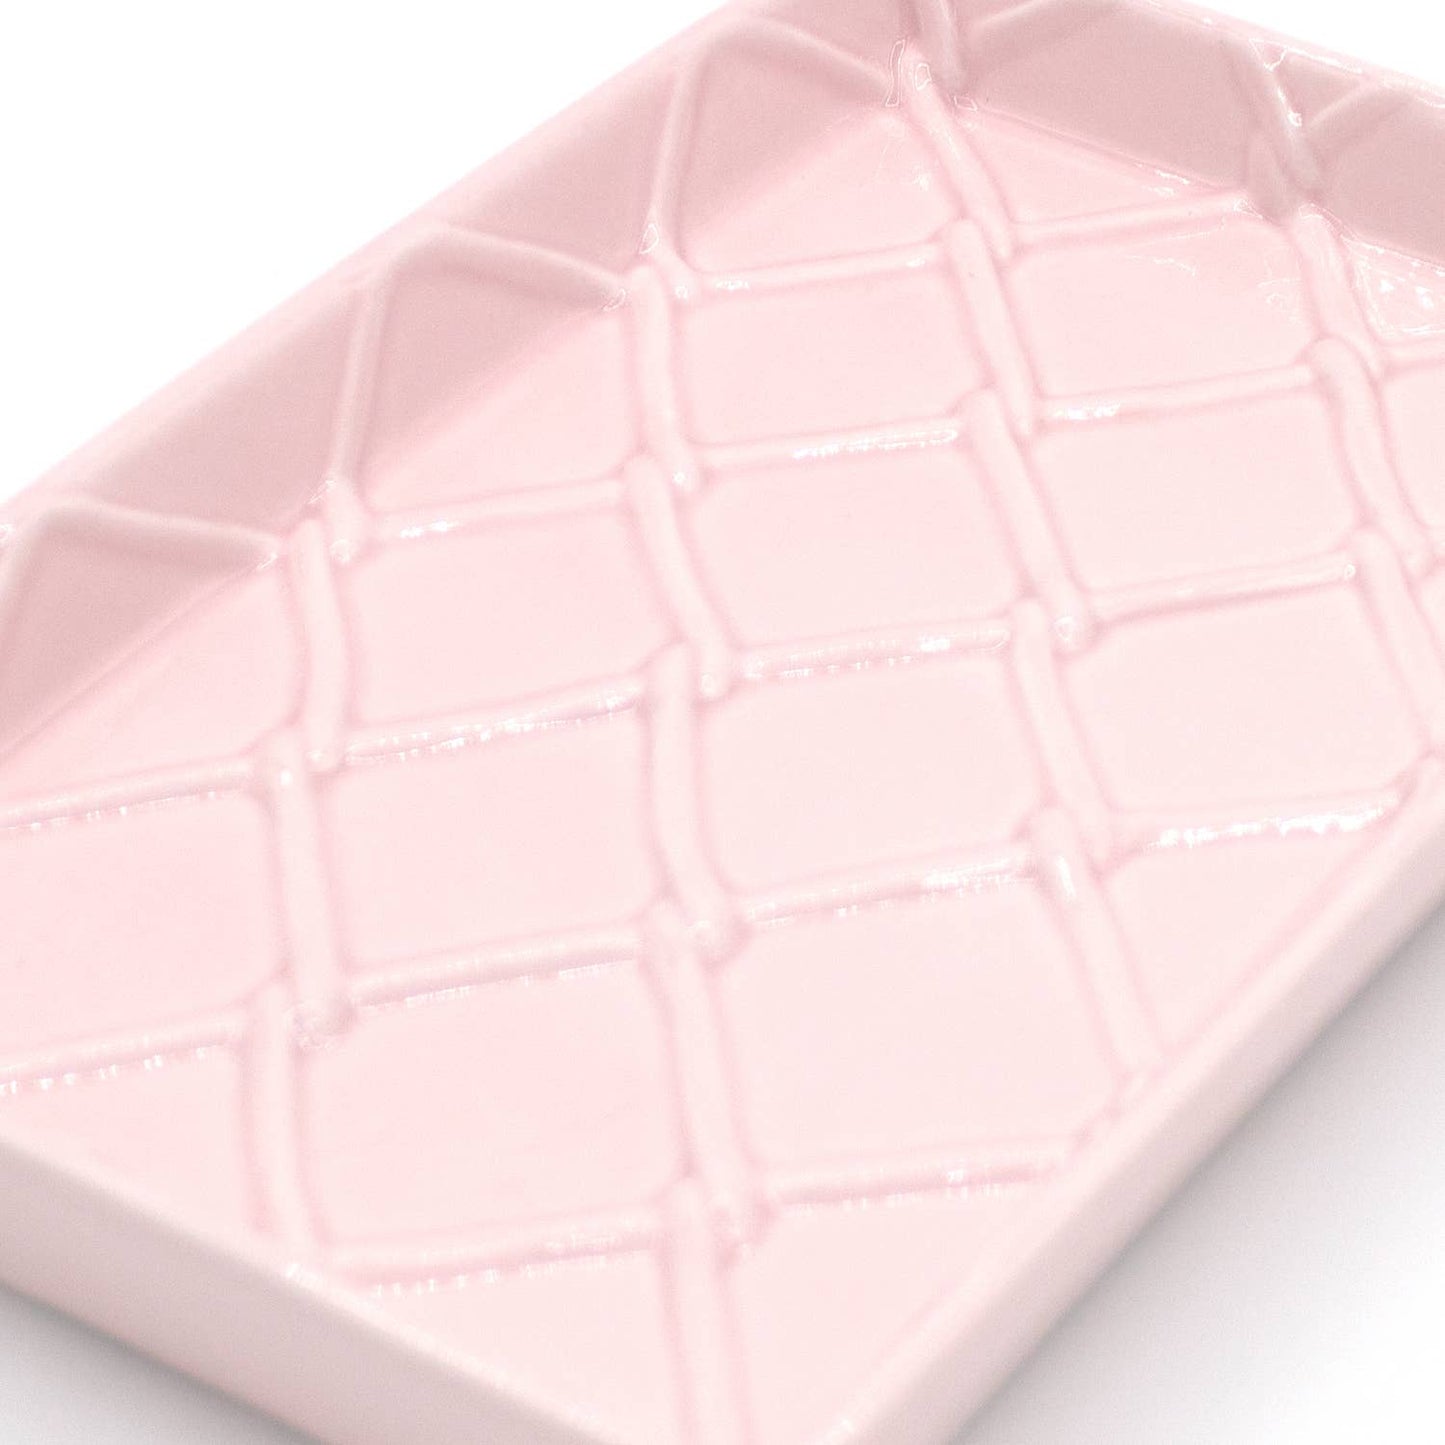 8 Oak Lane - Pink Textured Soap Dish